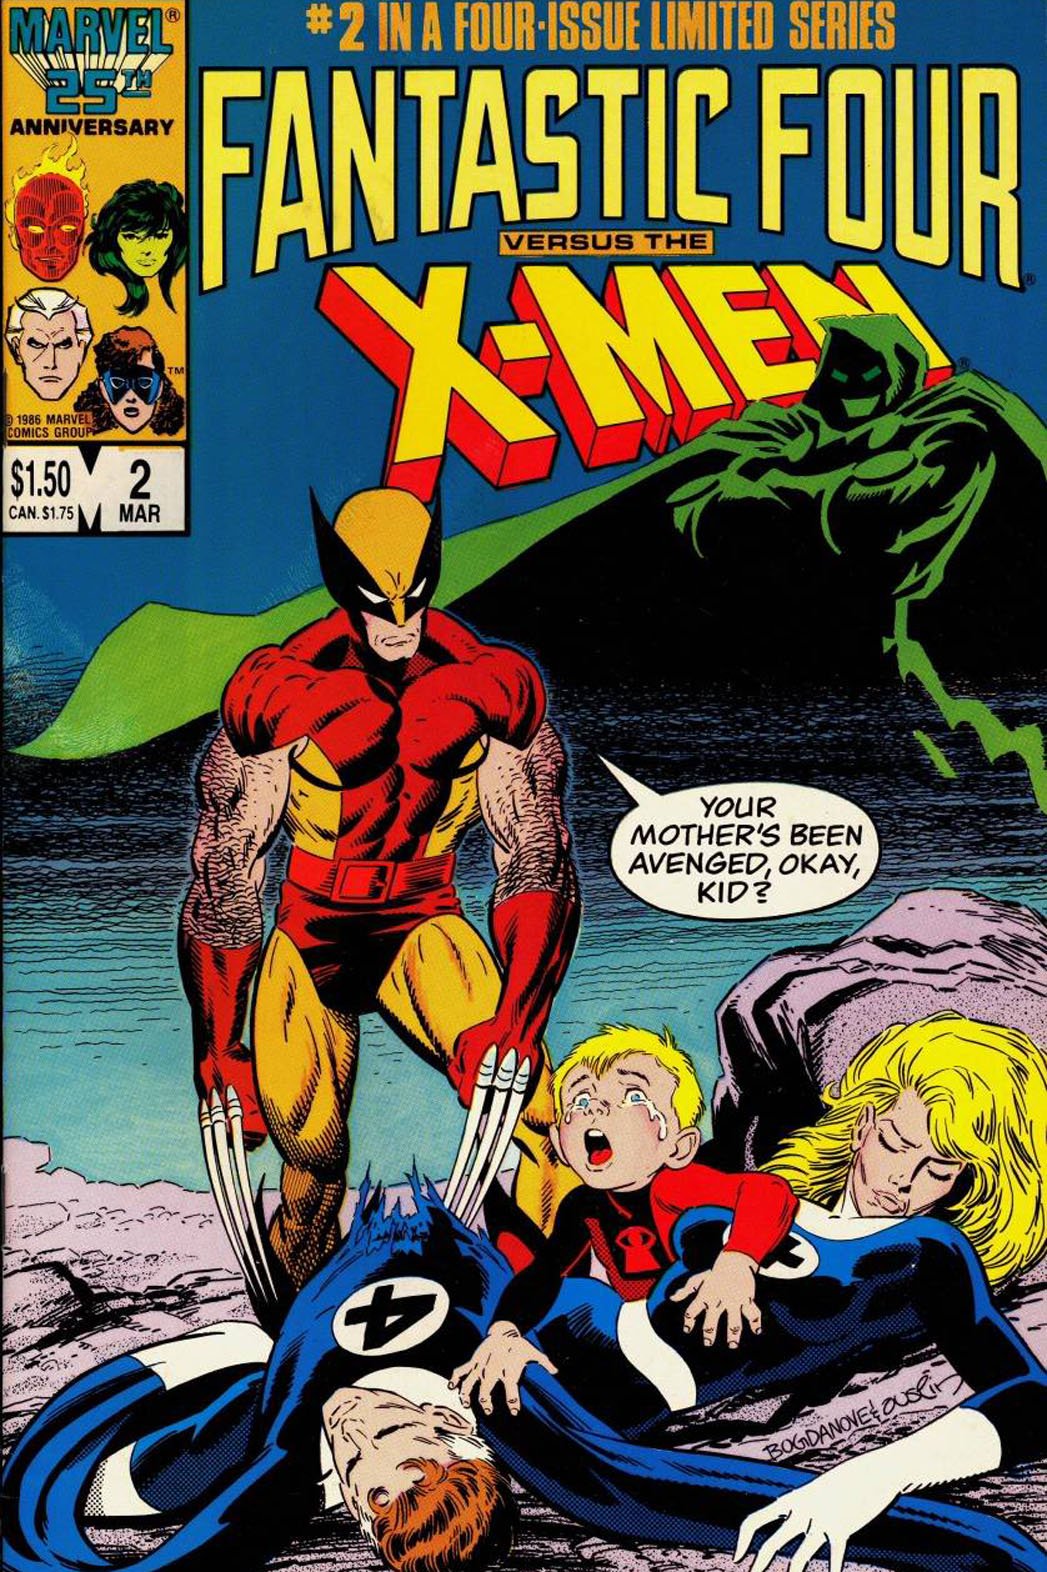 Positivo Subir Inscribirse RUMOR: Fox prepara X-MEN vs 4 Fantásticos